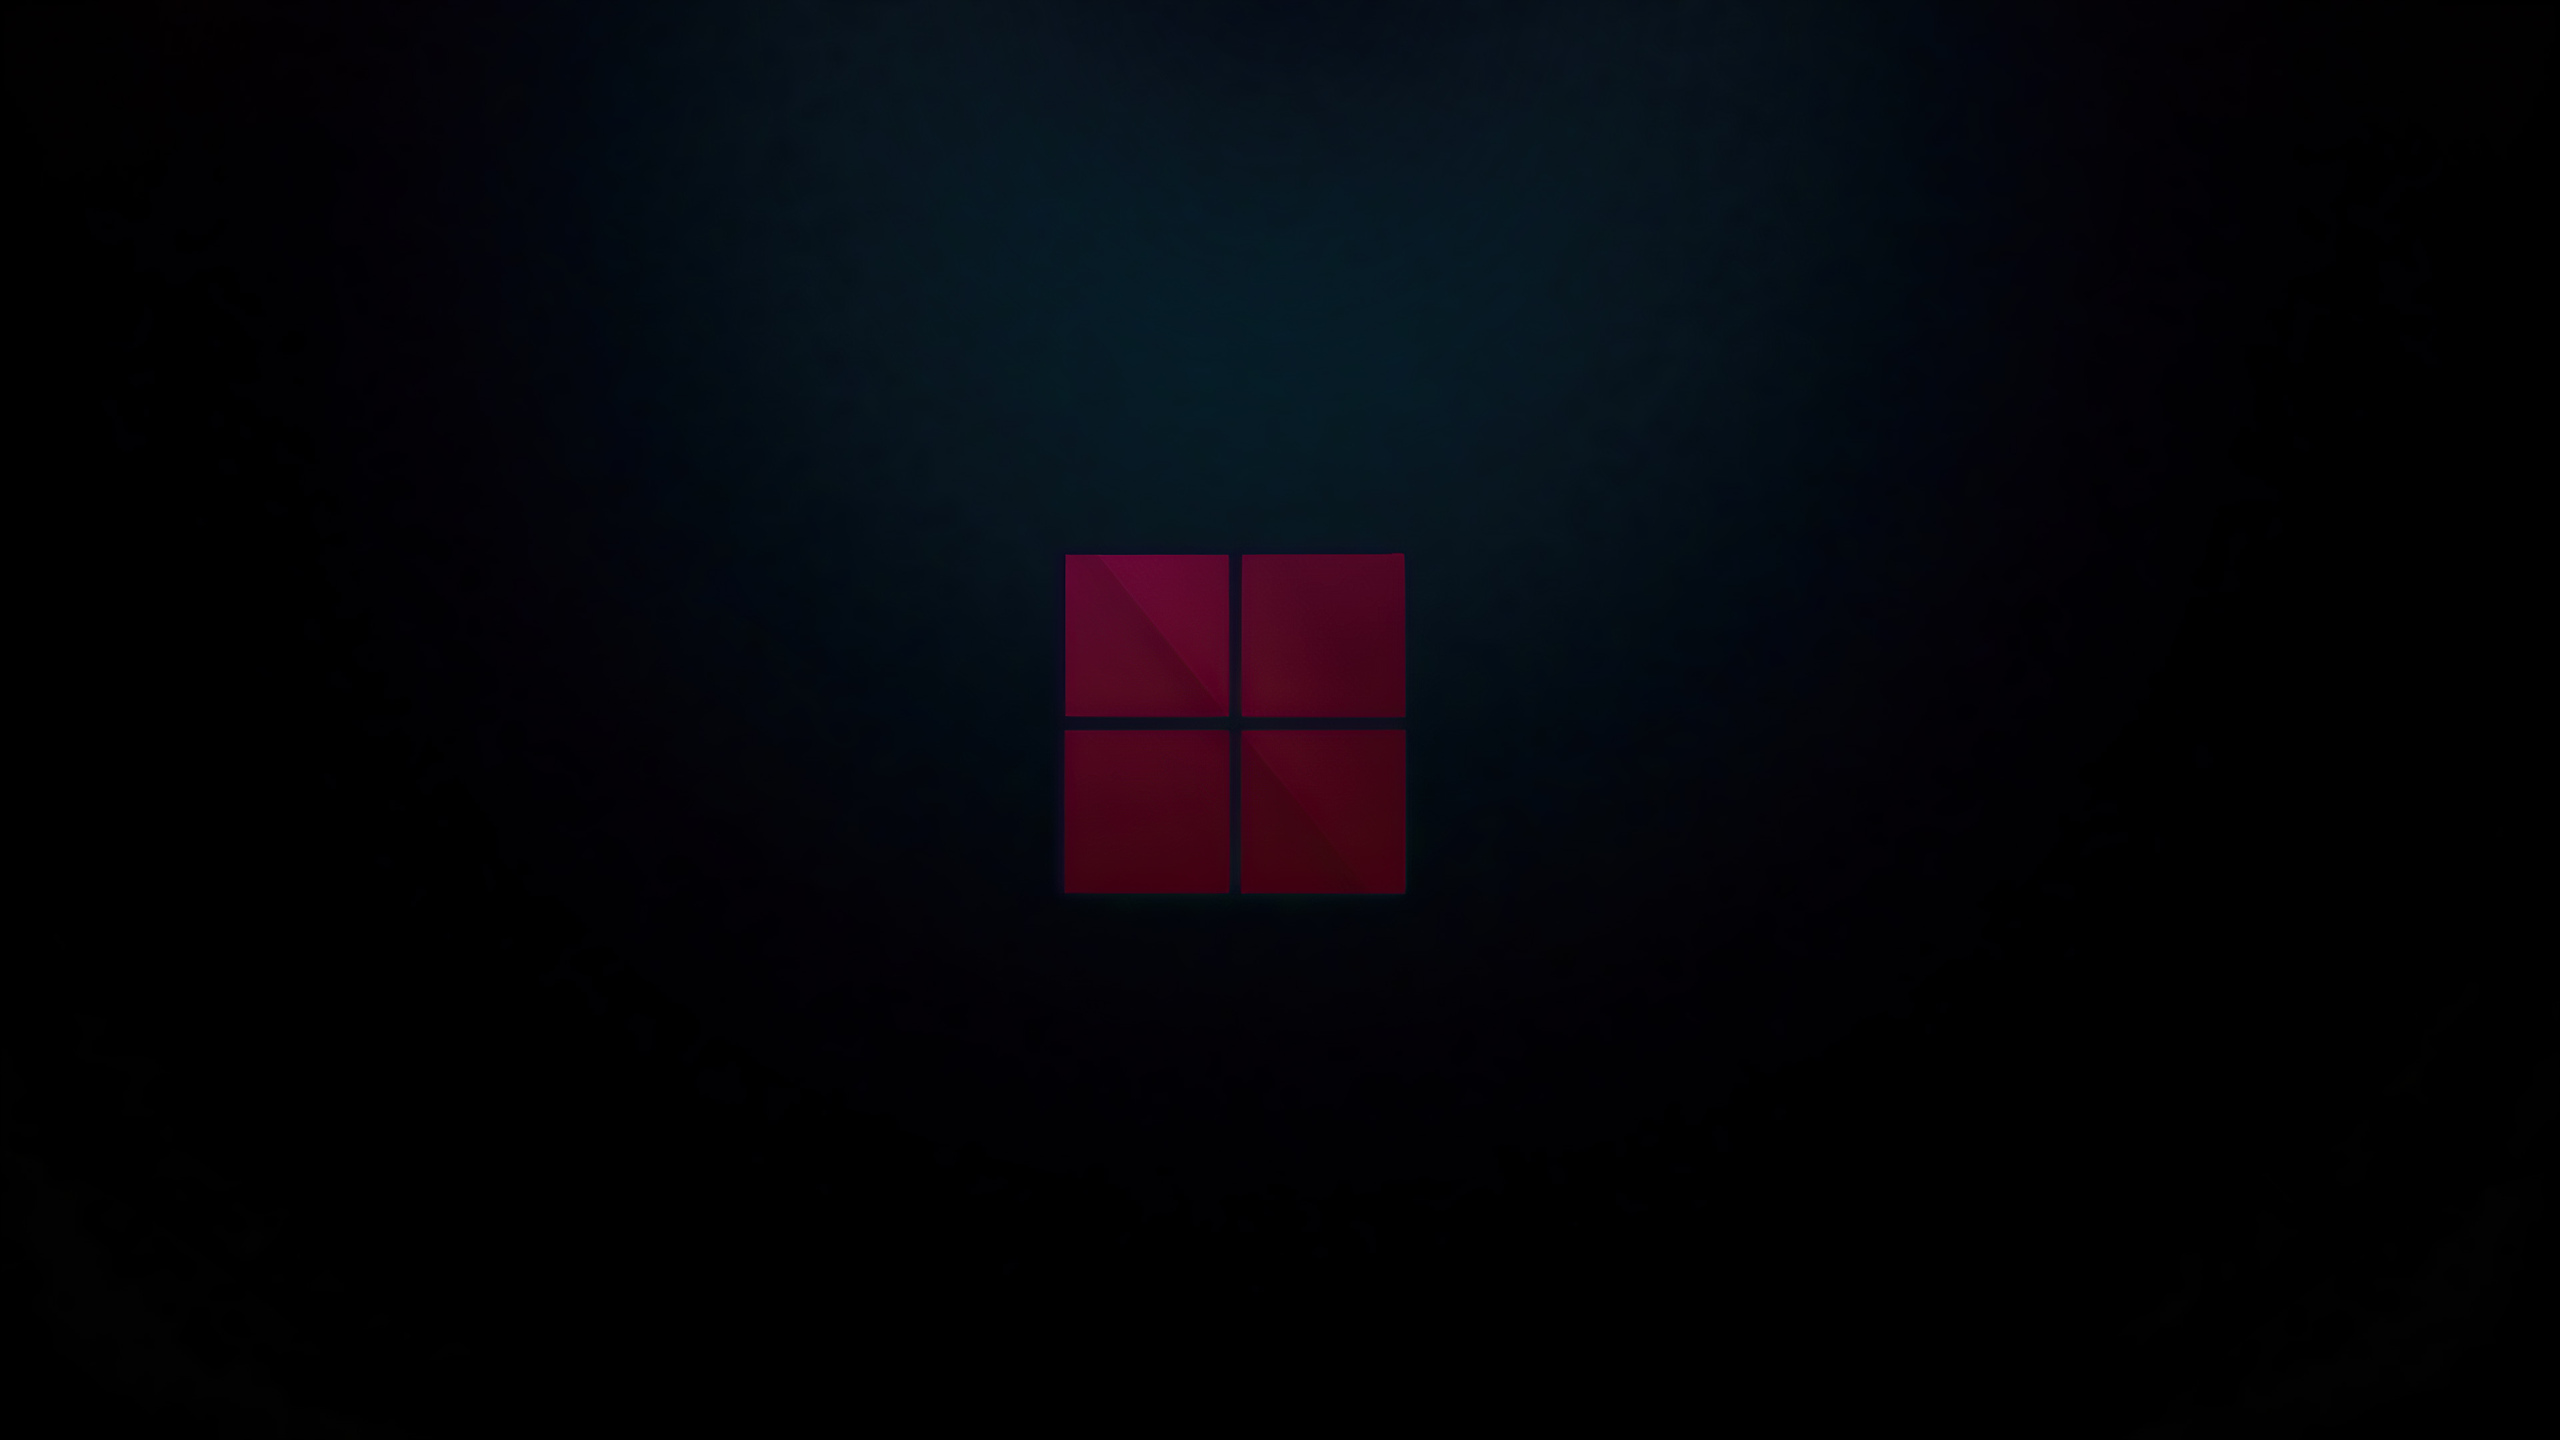 Windows 11 Wallpaper Hd Dark - IMAGESEE